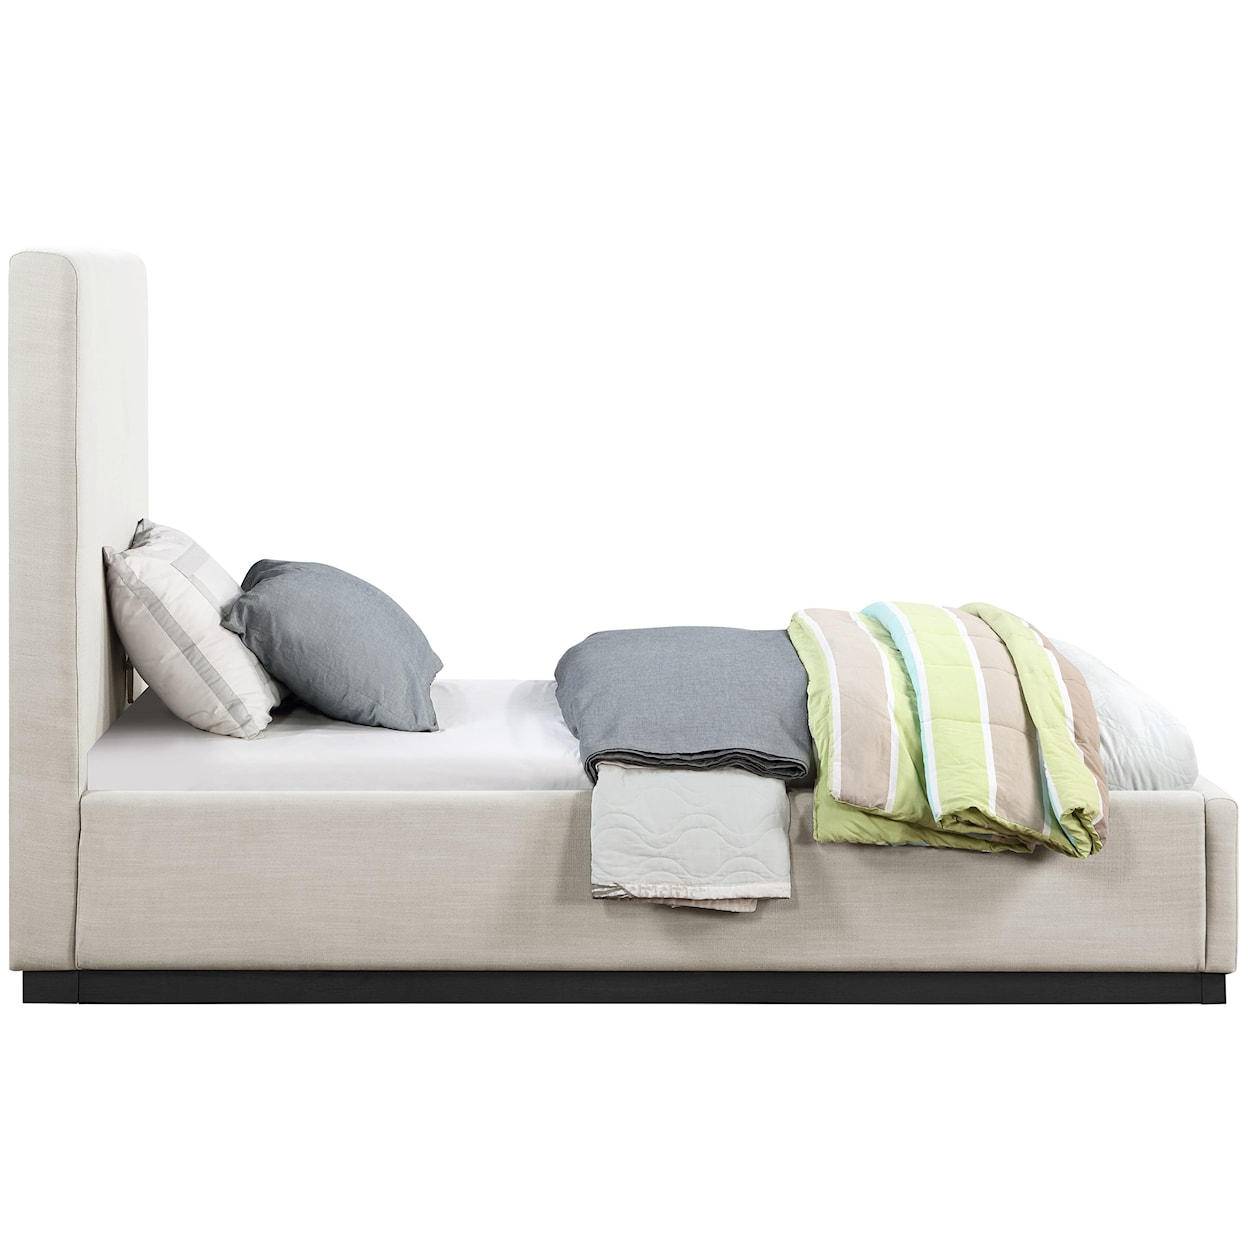 Meridian Furniture Alfie Twin Bed